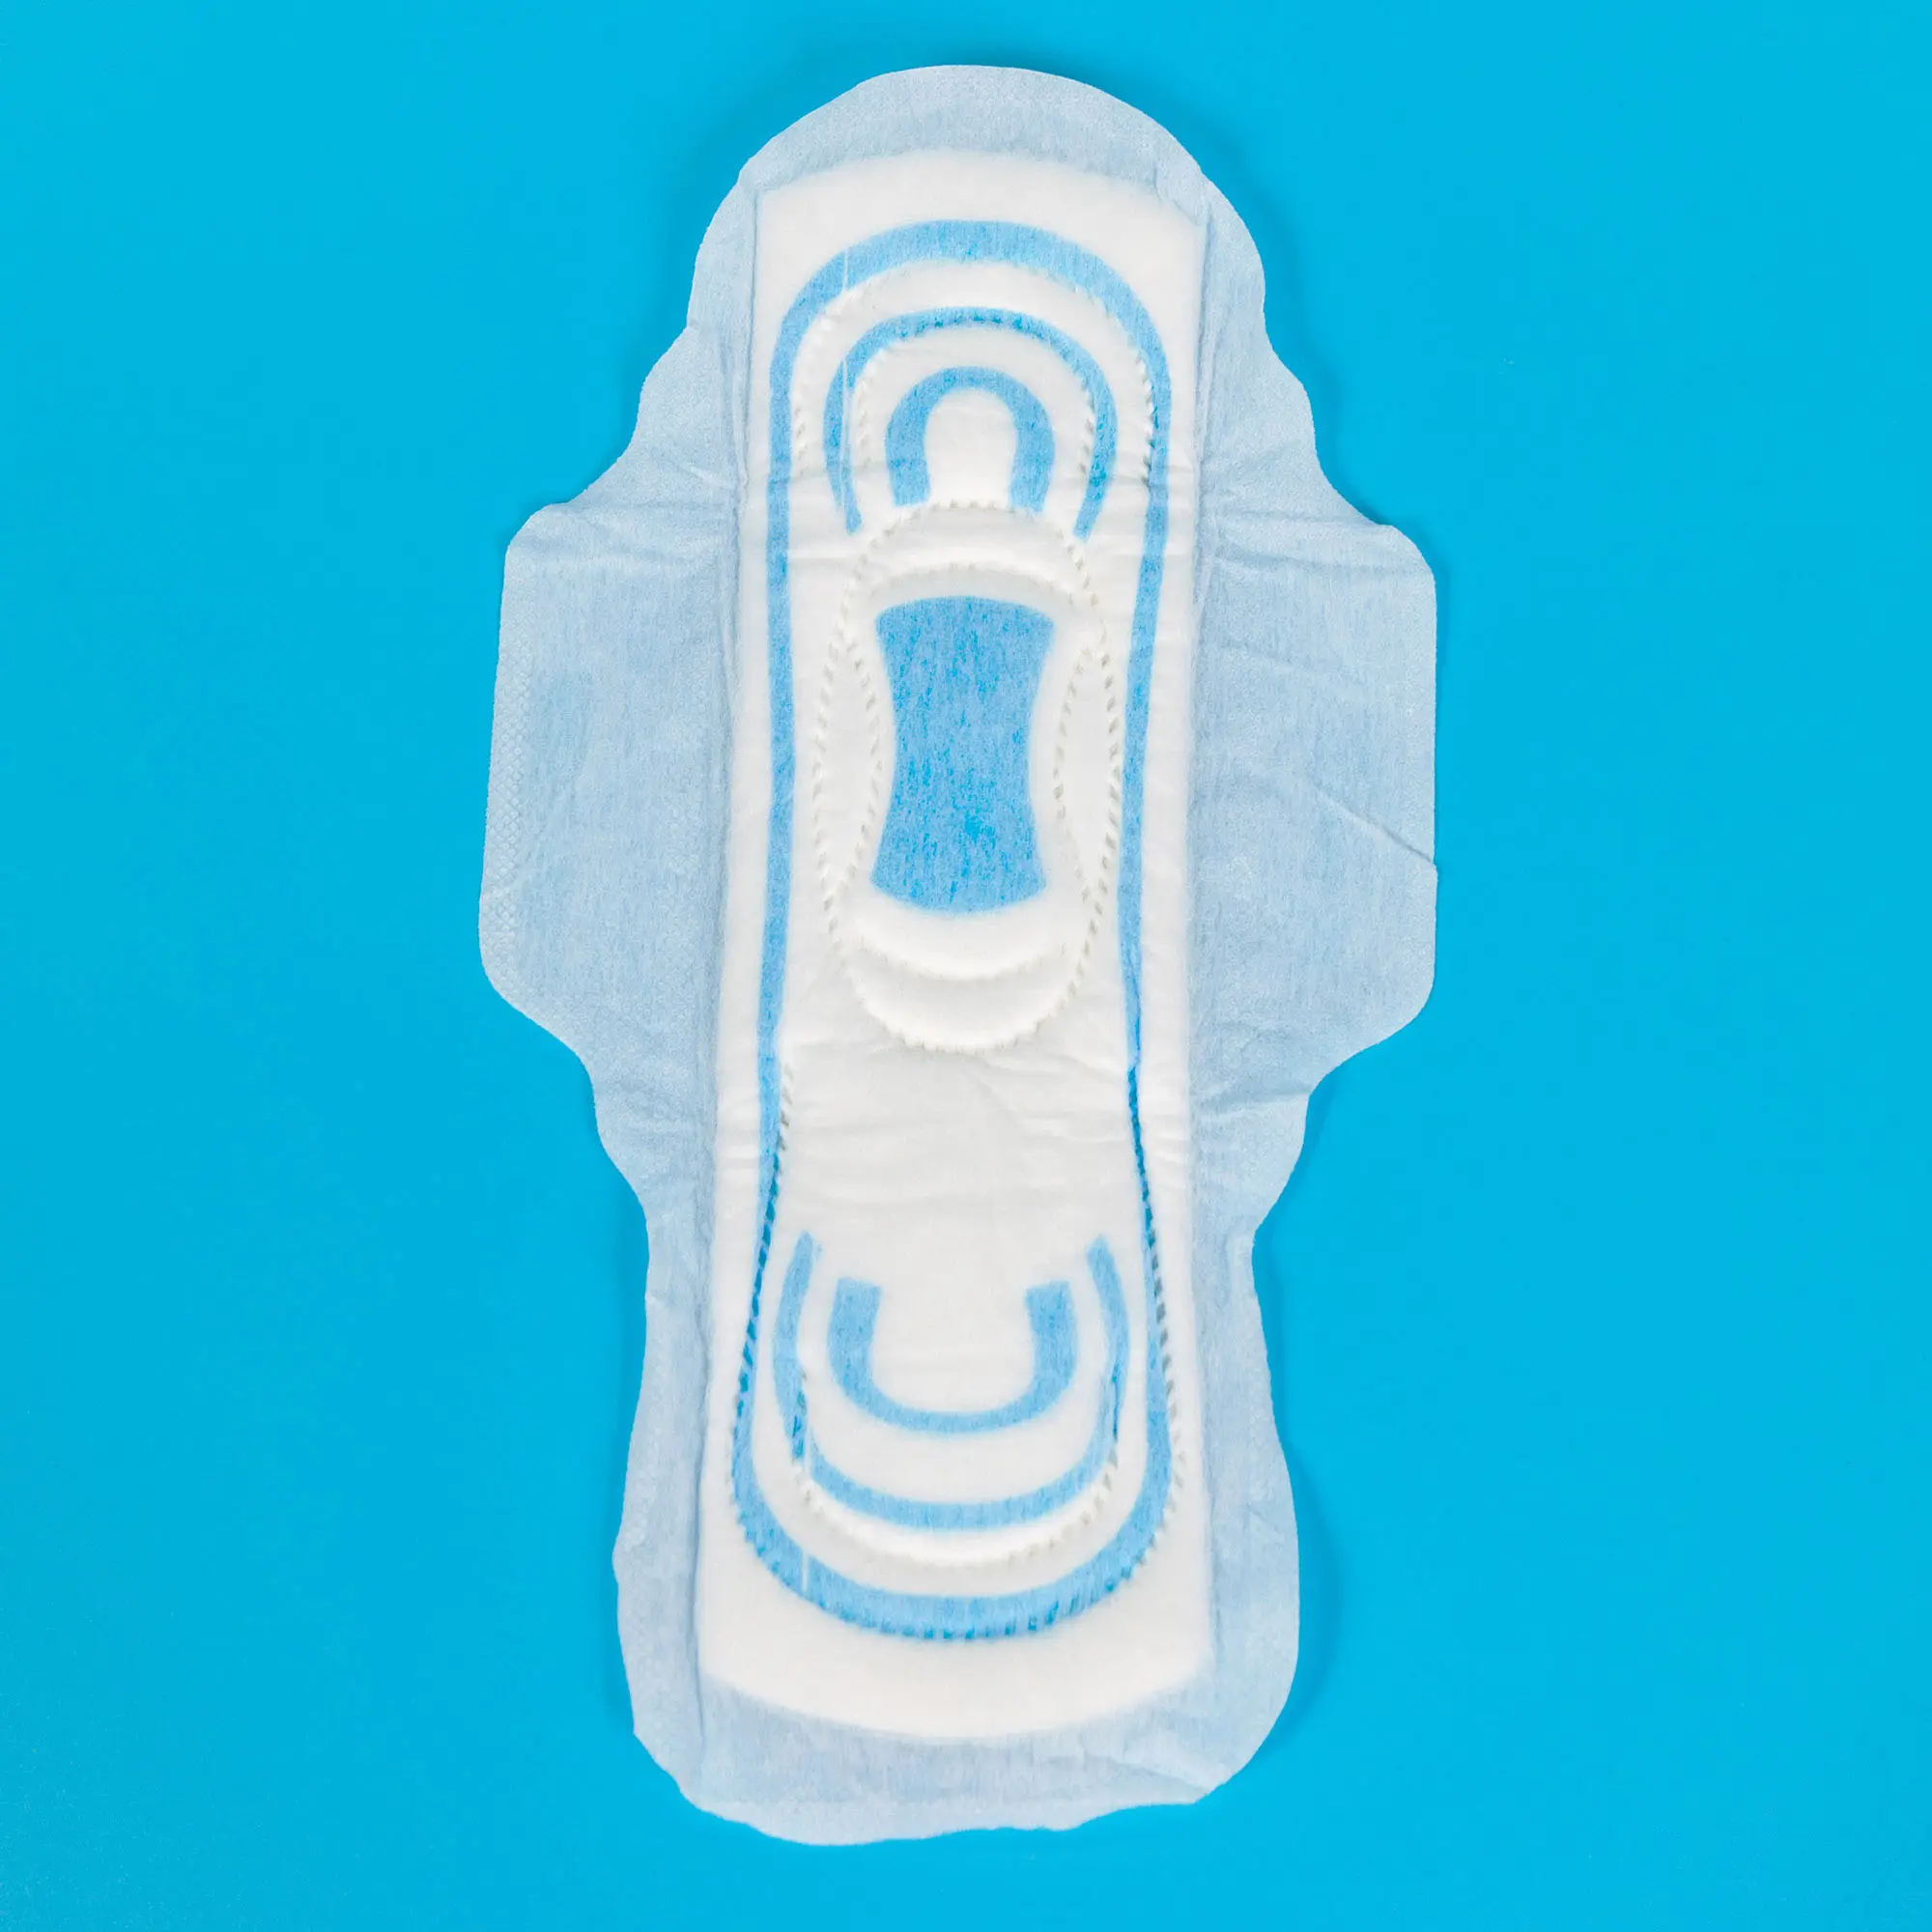 थोक मूल्य सैनिटरी नैपकिन डिस्पोजेबल सुपरशोशोषक सैनिटरी पैड 3 डी लीक गार्ड स्त्री स्वच्छता नैपकिन